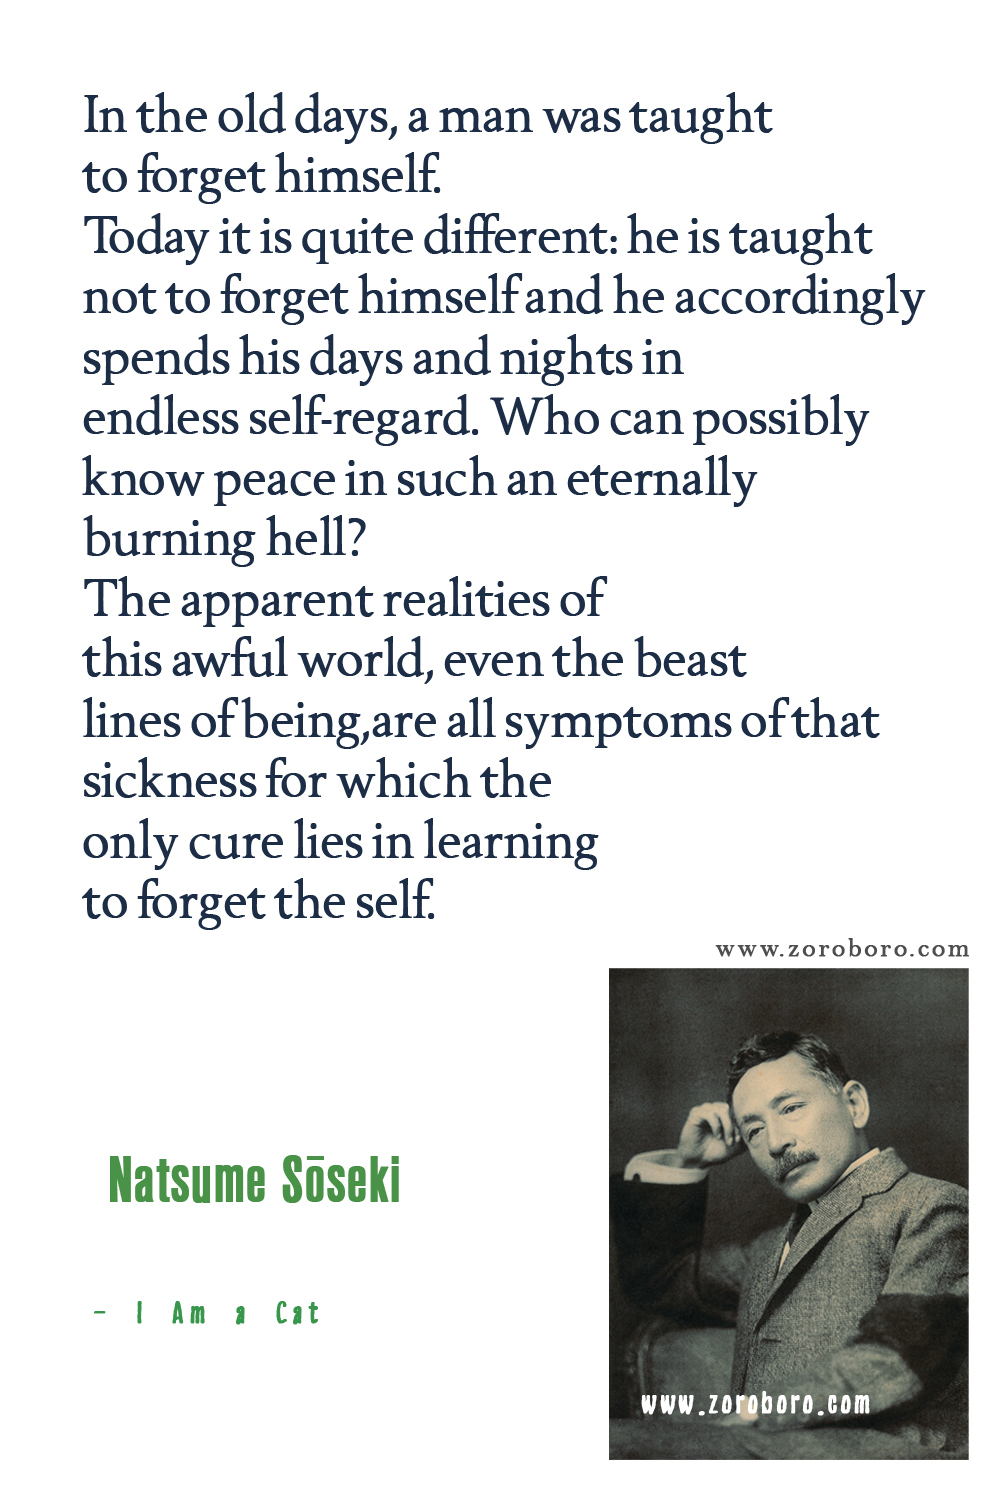 Natsume Sōseki Quotes, Natsume Sōseki Kokoro, I Am a Cat Quotes, Natsume Sōseki Books Quotes, Natsume Soseki Poems Quotes.